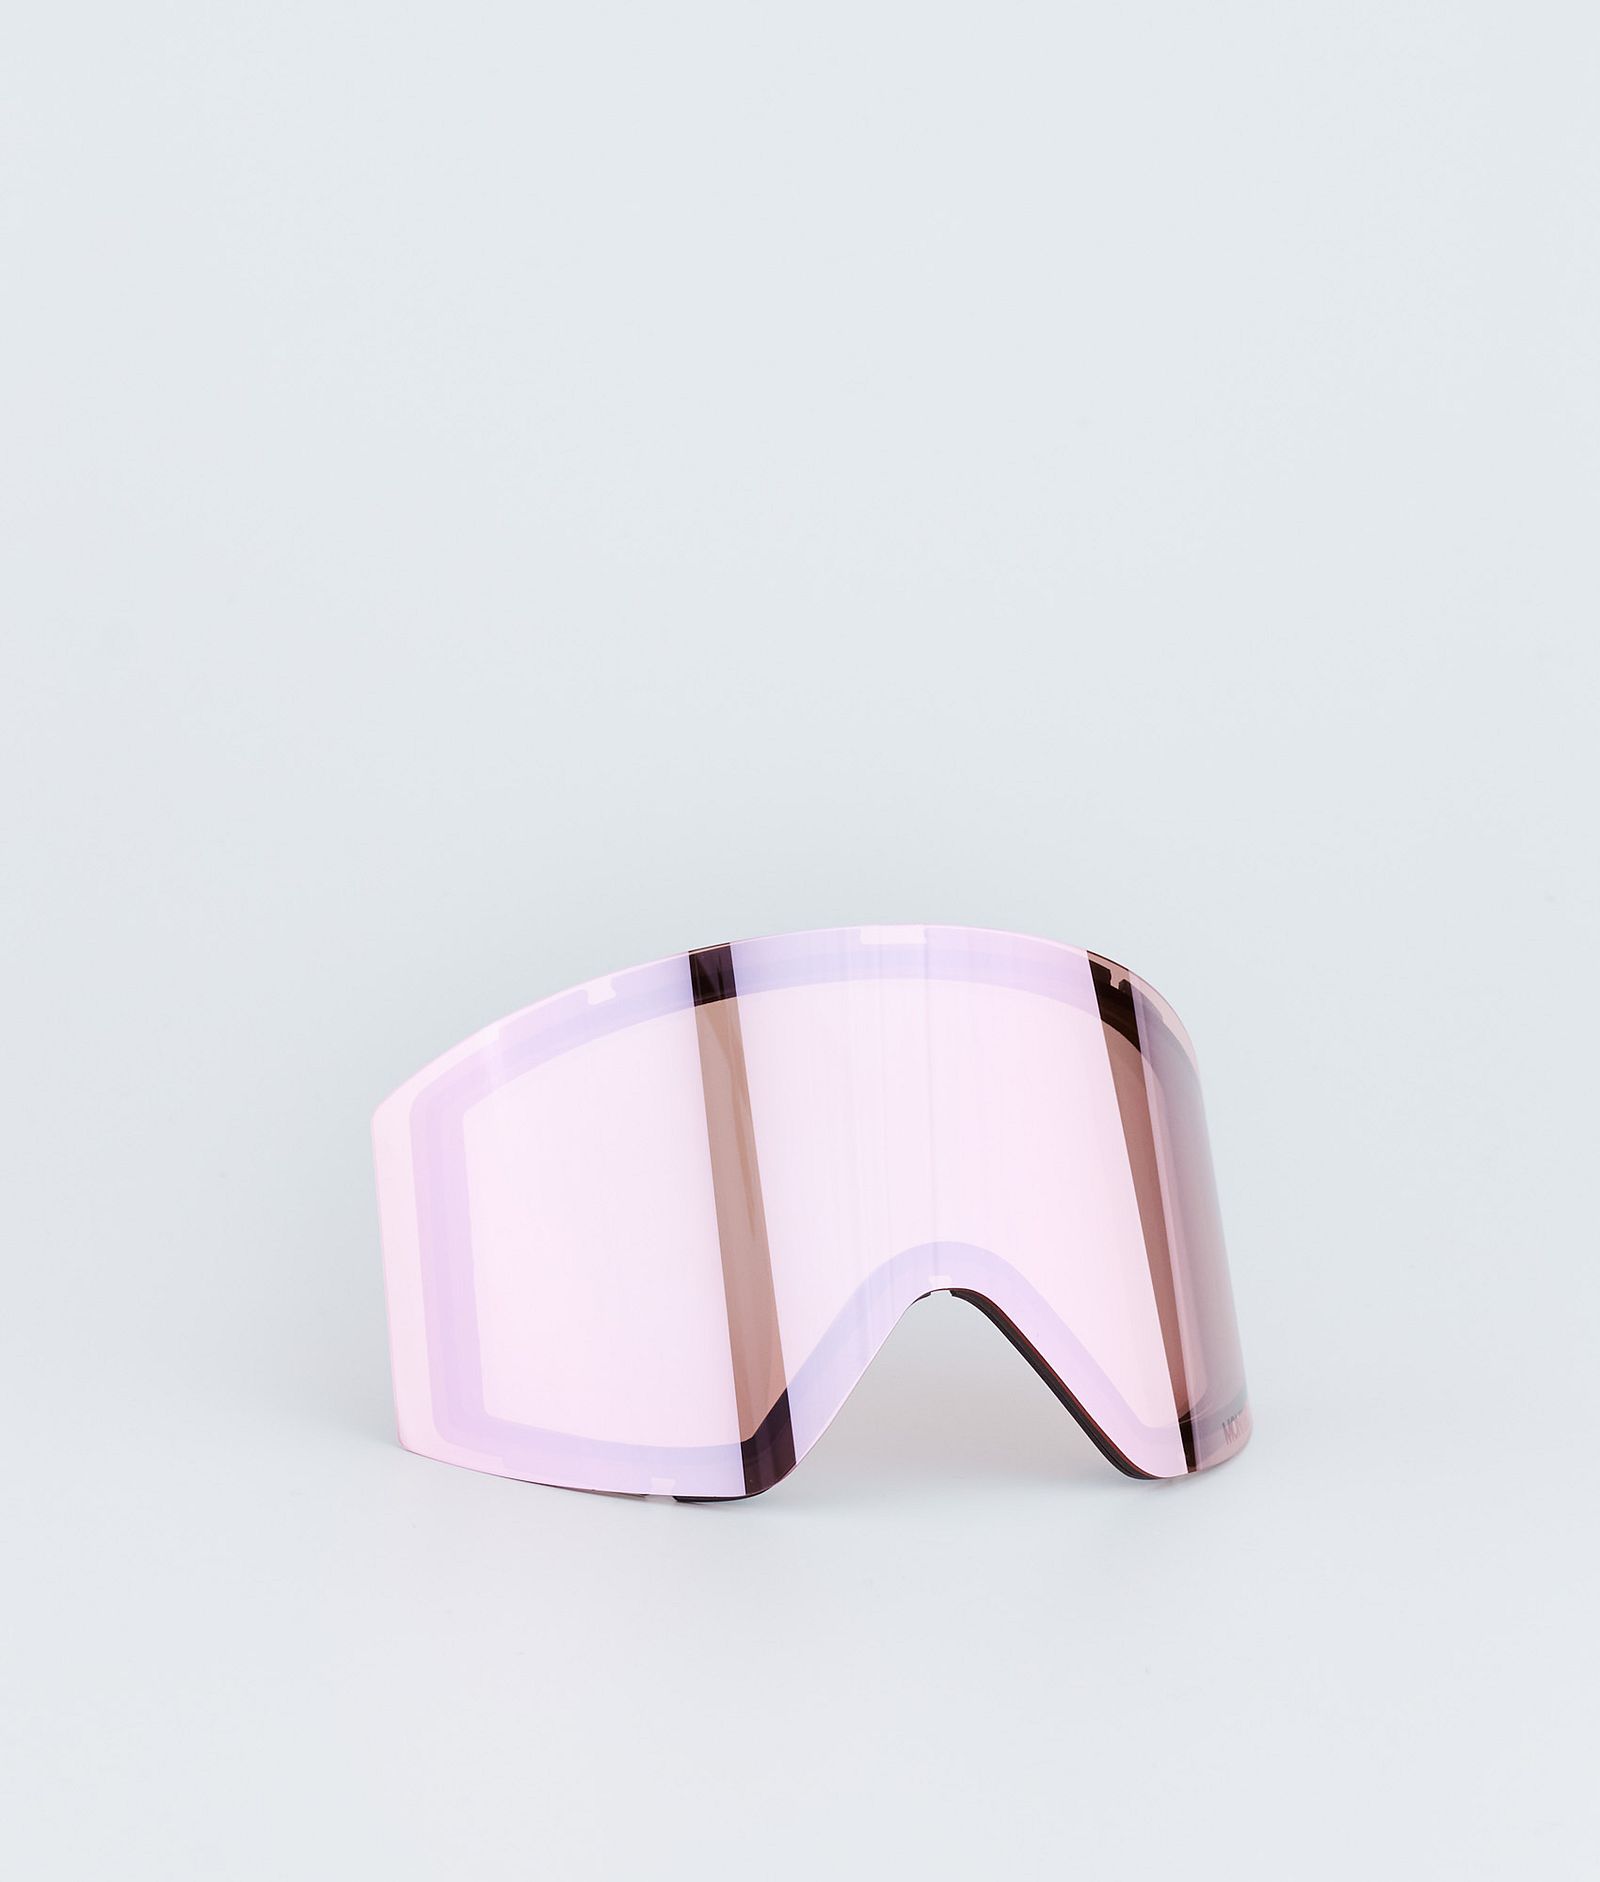 Scope Goggle Lens Ekstralinse Snow Pink Sapphire Mirror